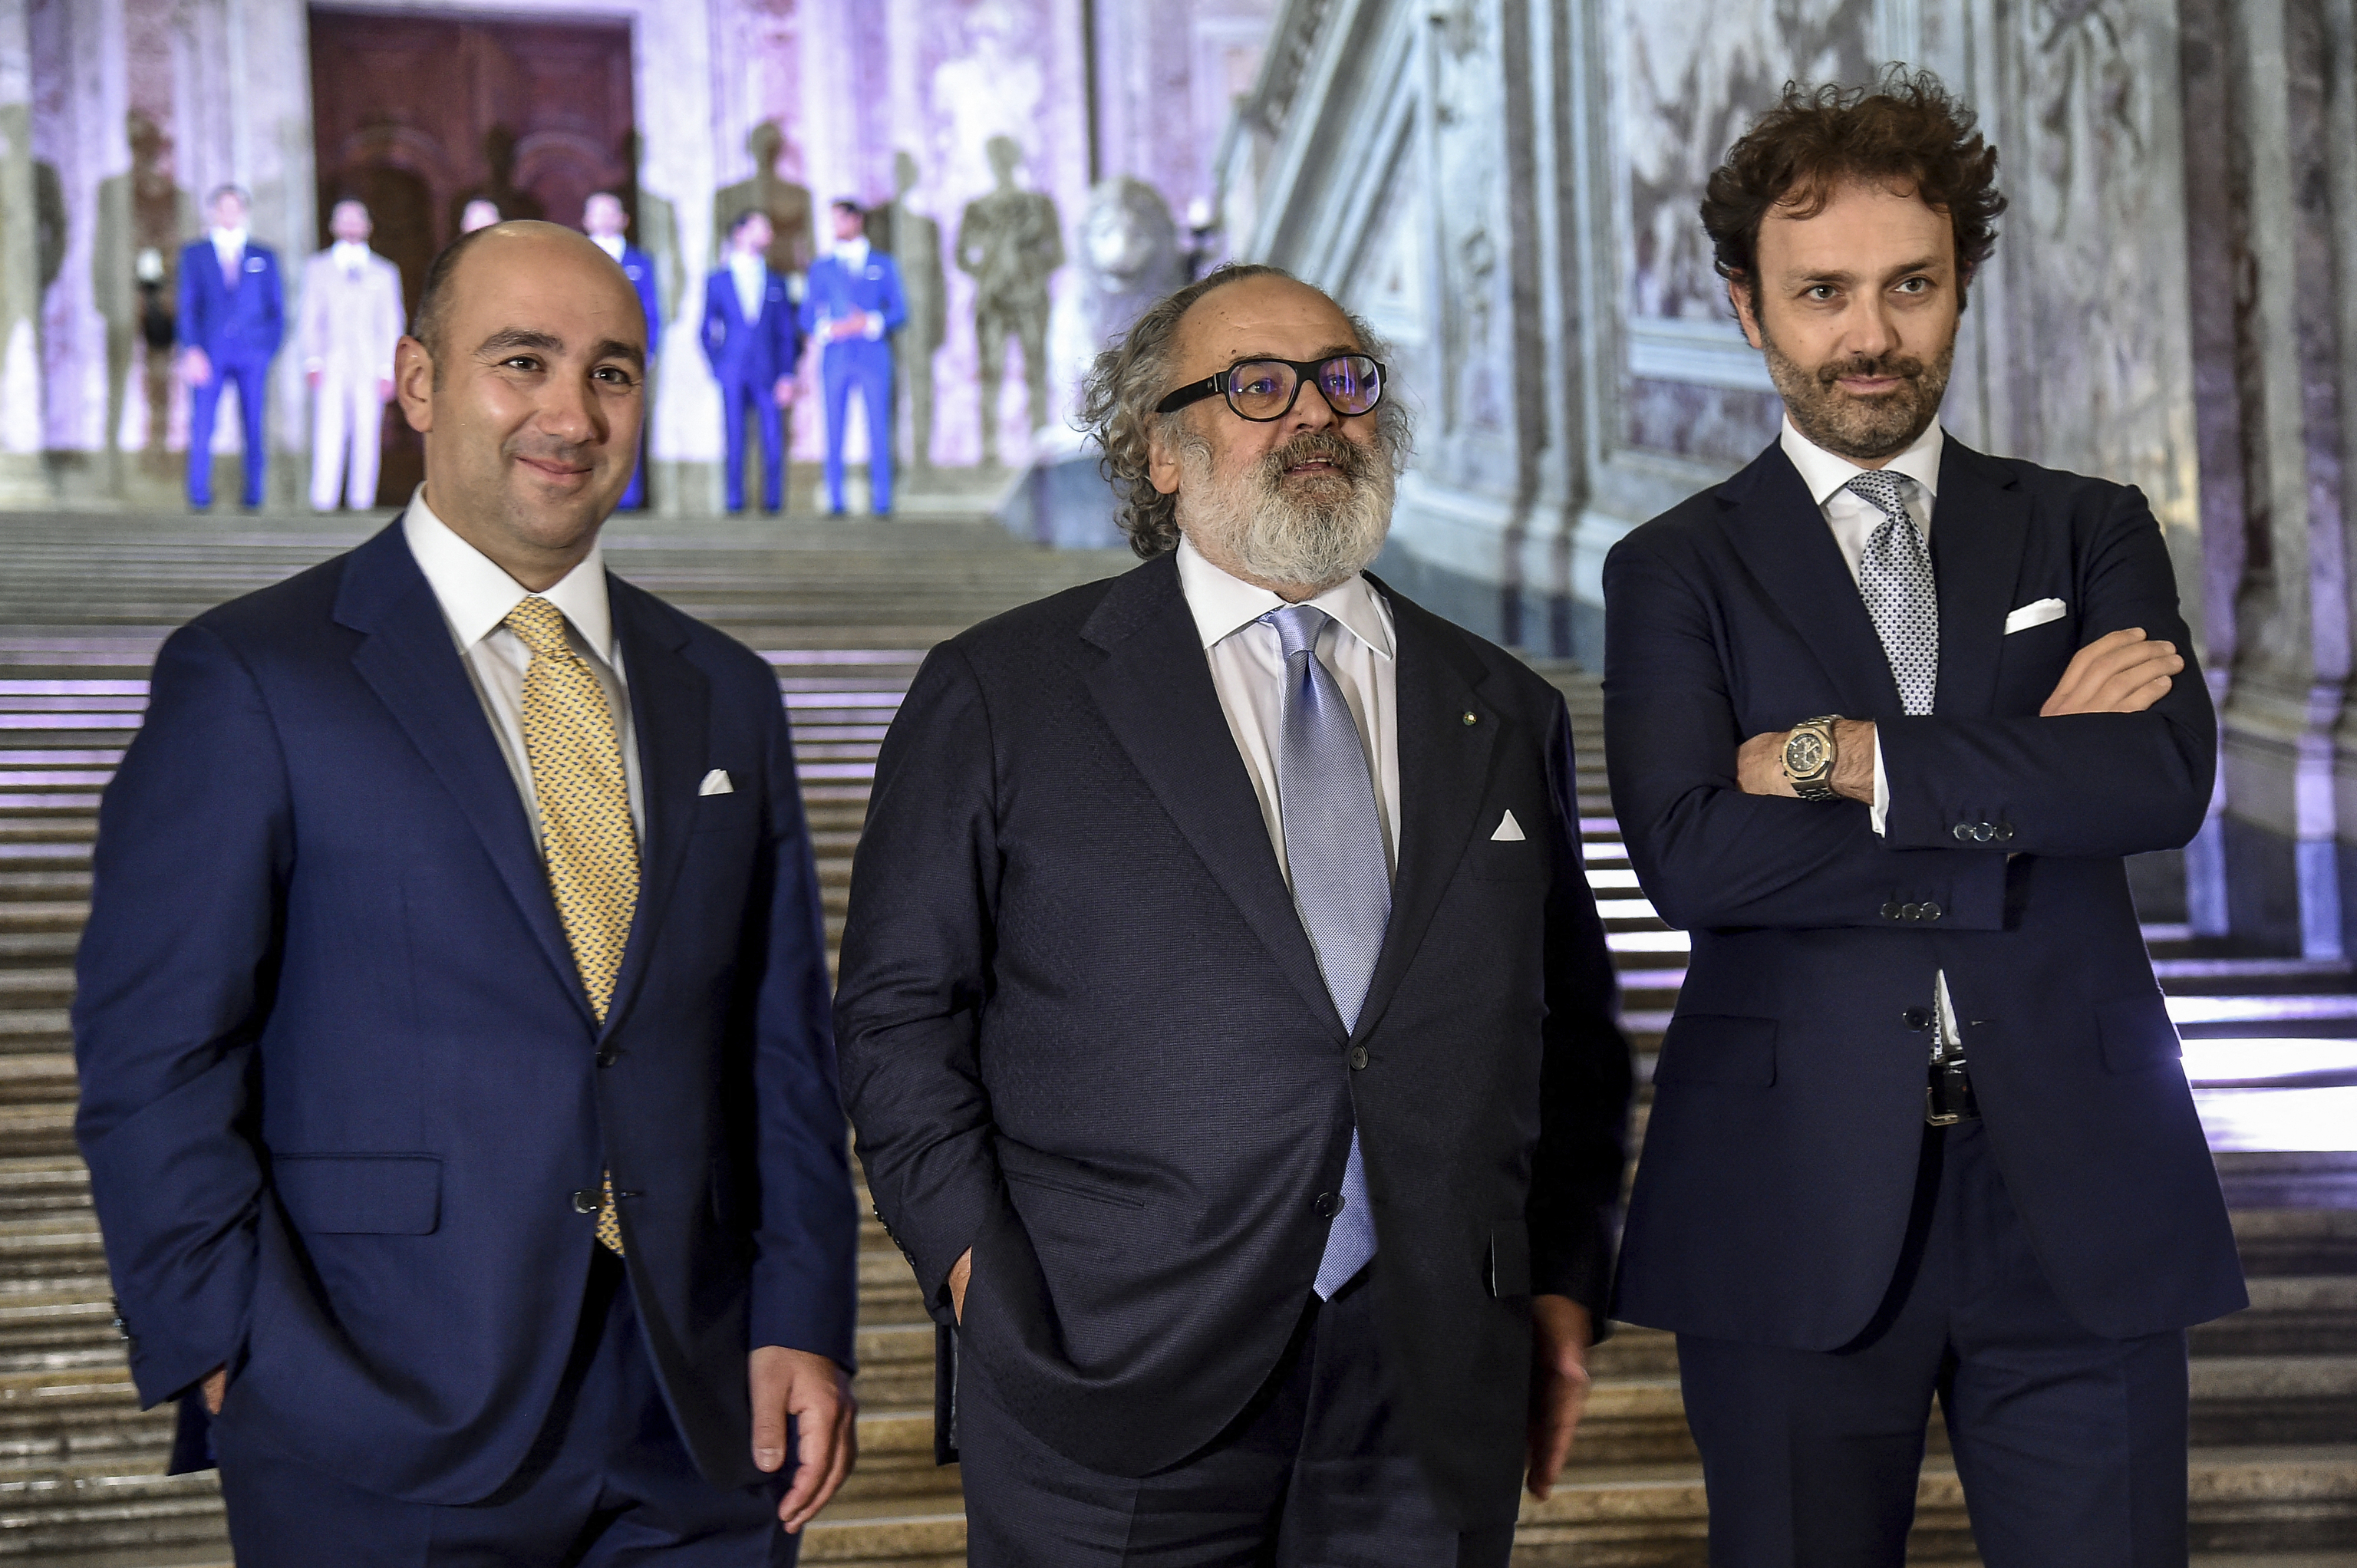 Stefano Ricci, marca masculina que vende cinturones de diamantes de 124.000 euros llega Madrid: "Son piezas únicas" | Celebrities